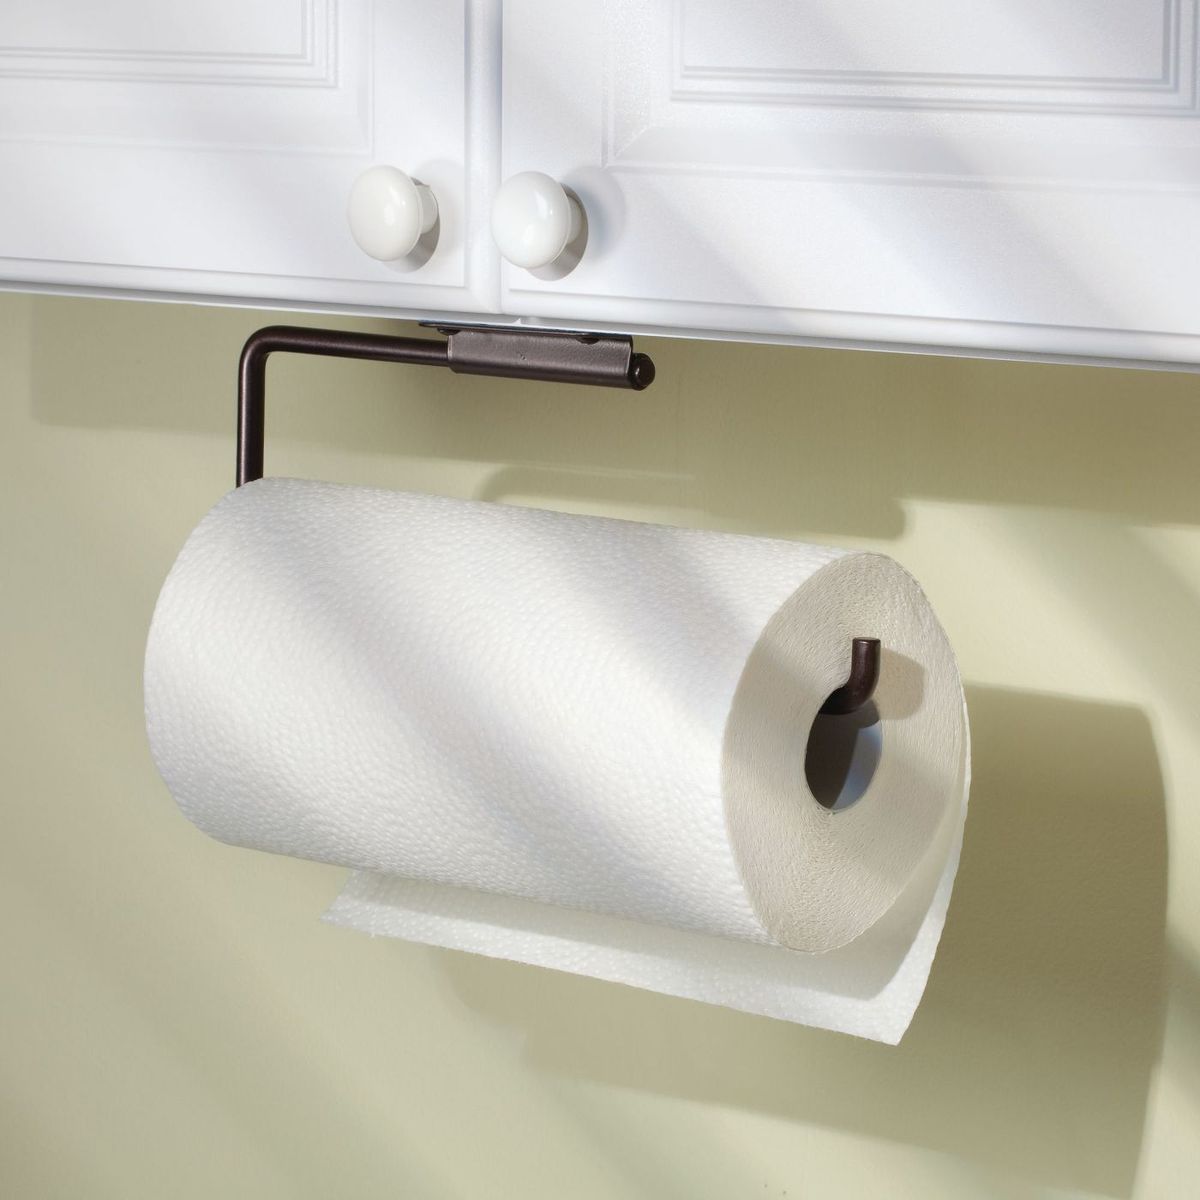 InterDesign Swivel Wall Mount Steel Paper Towel Holder